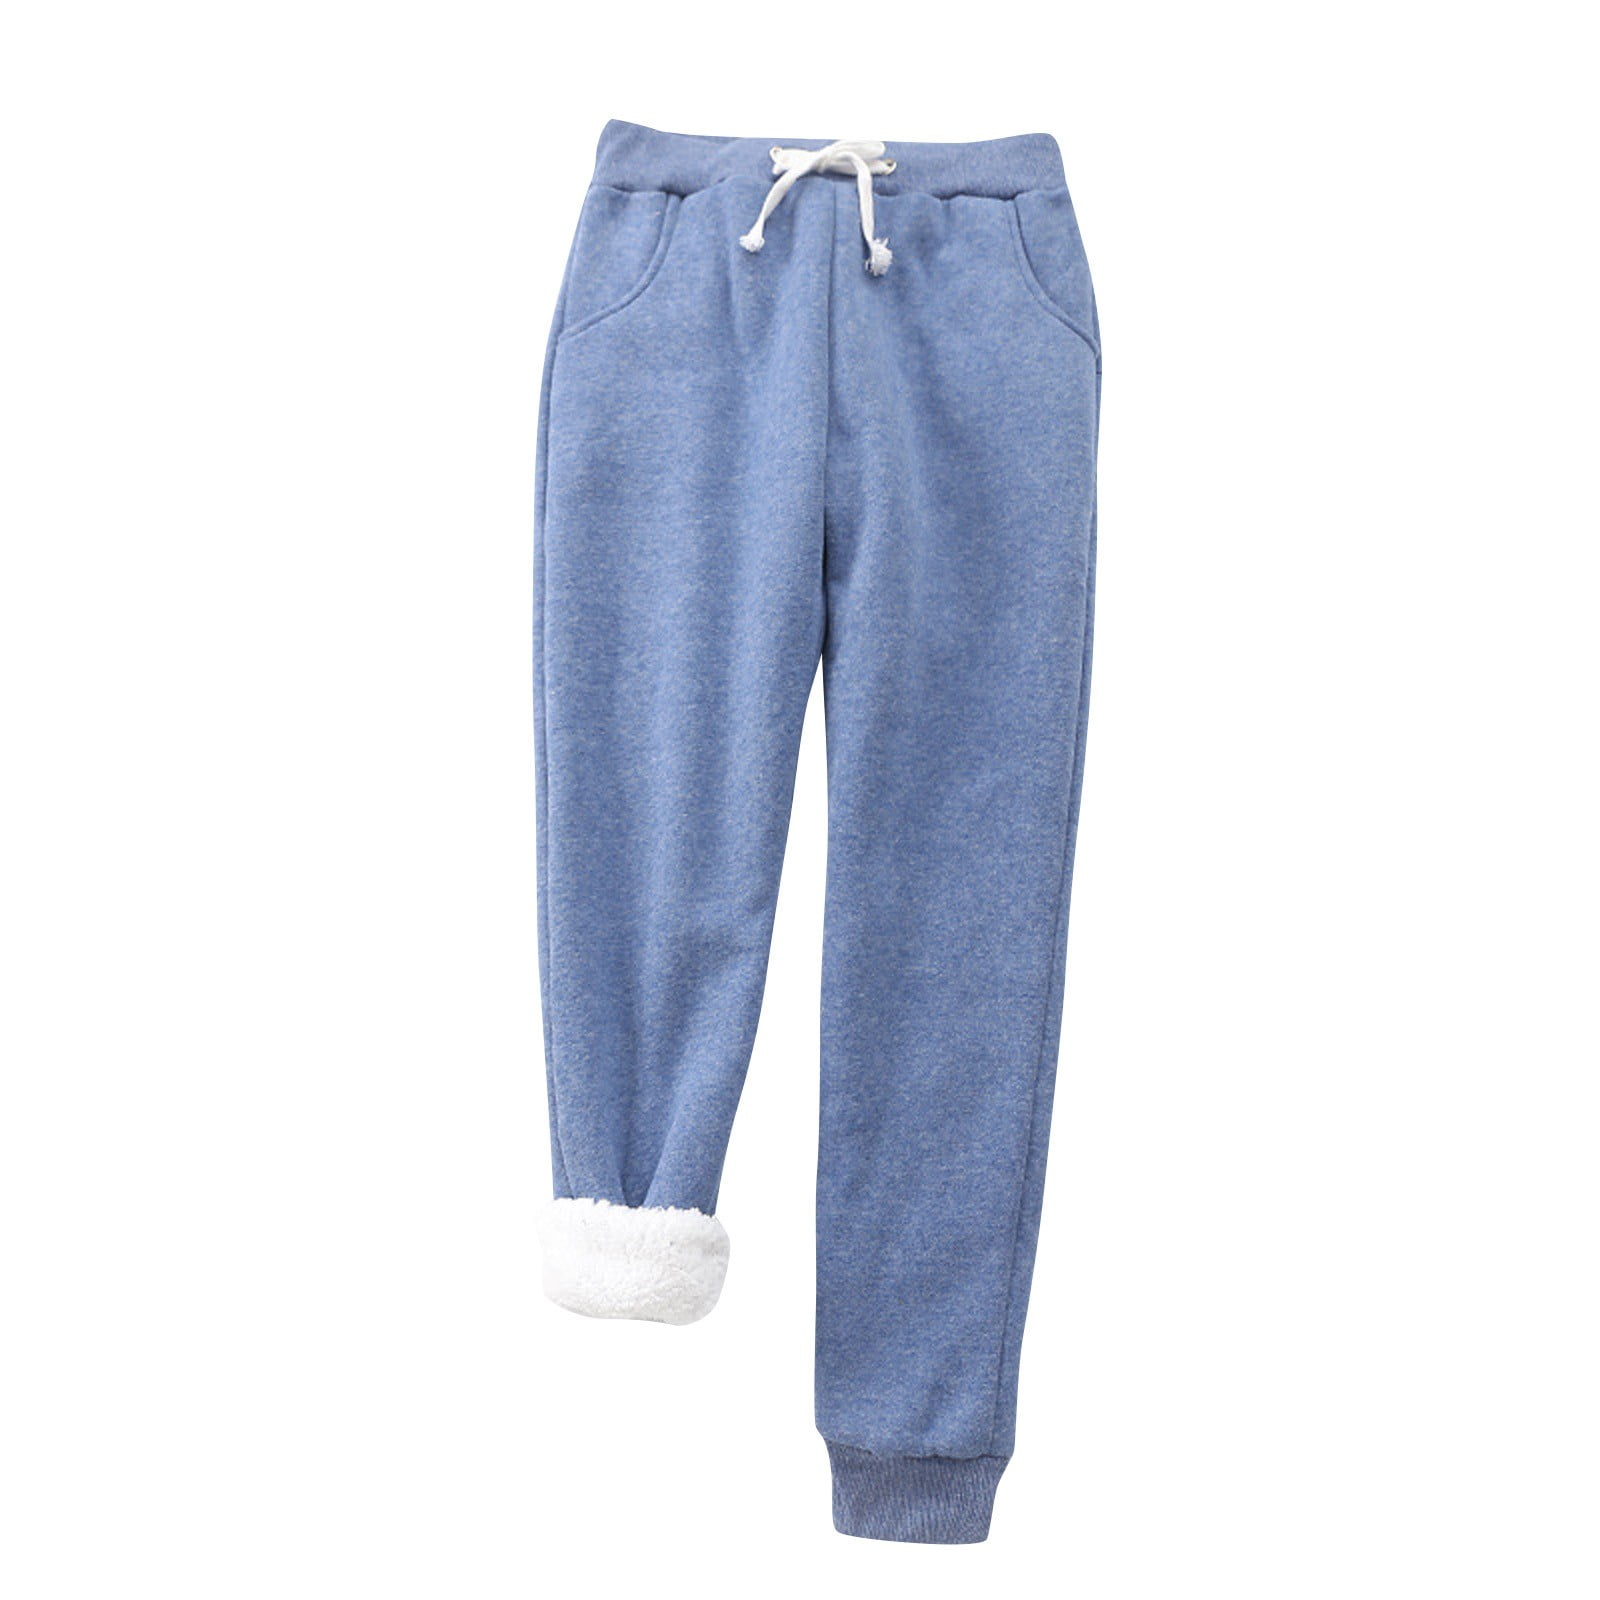 Susanny Sweat Pants for Women Fleece Lined High Waisted Petite